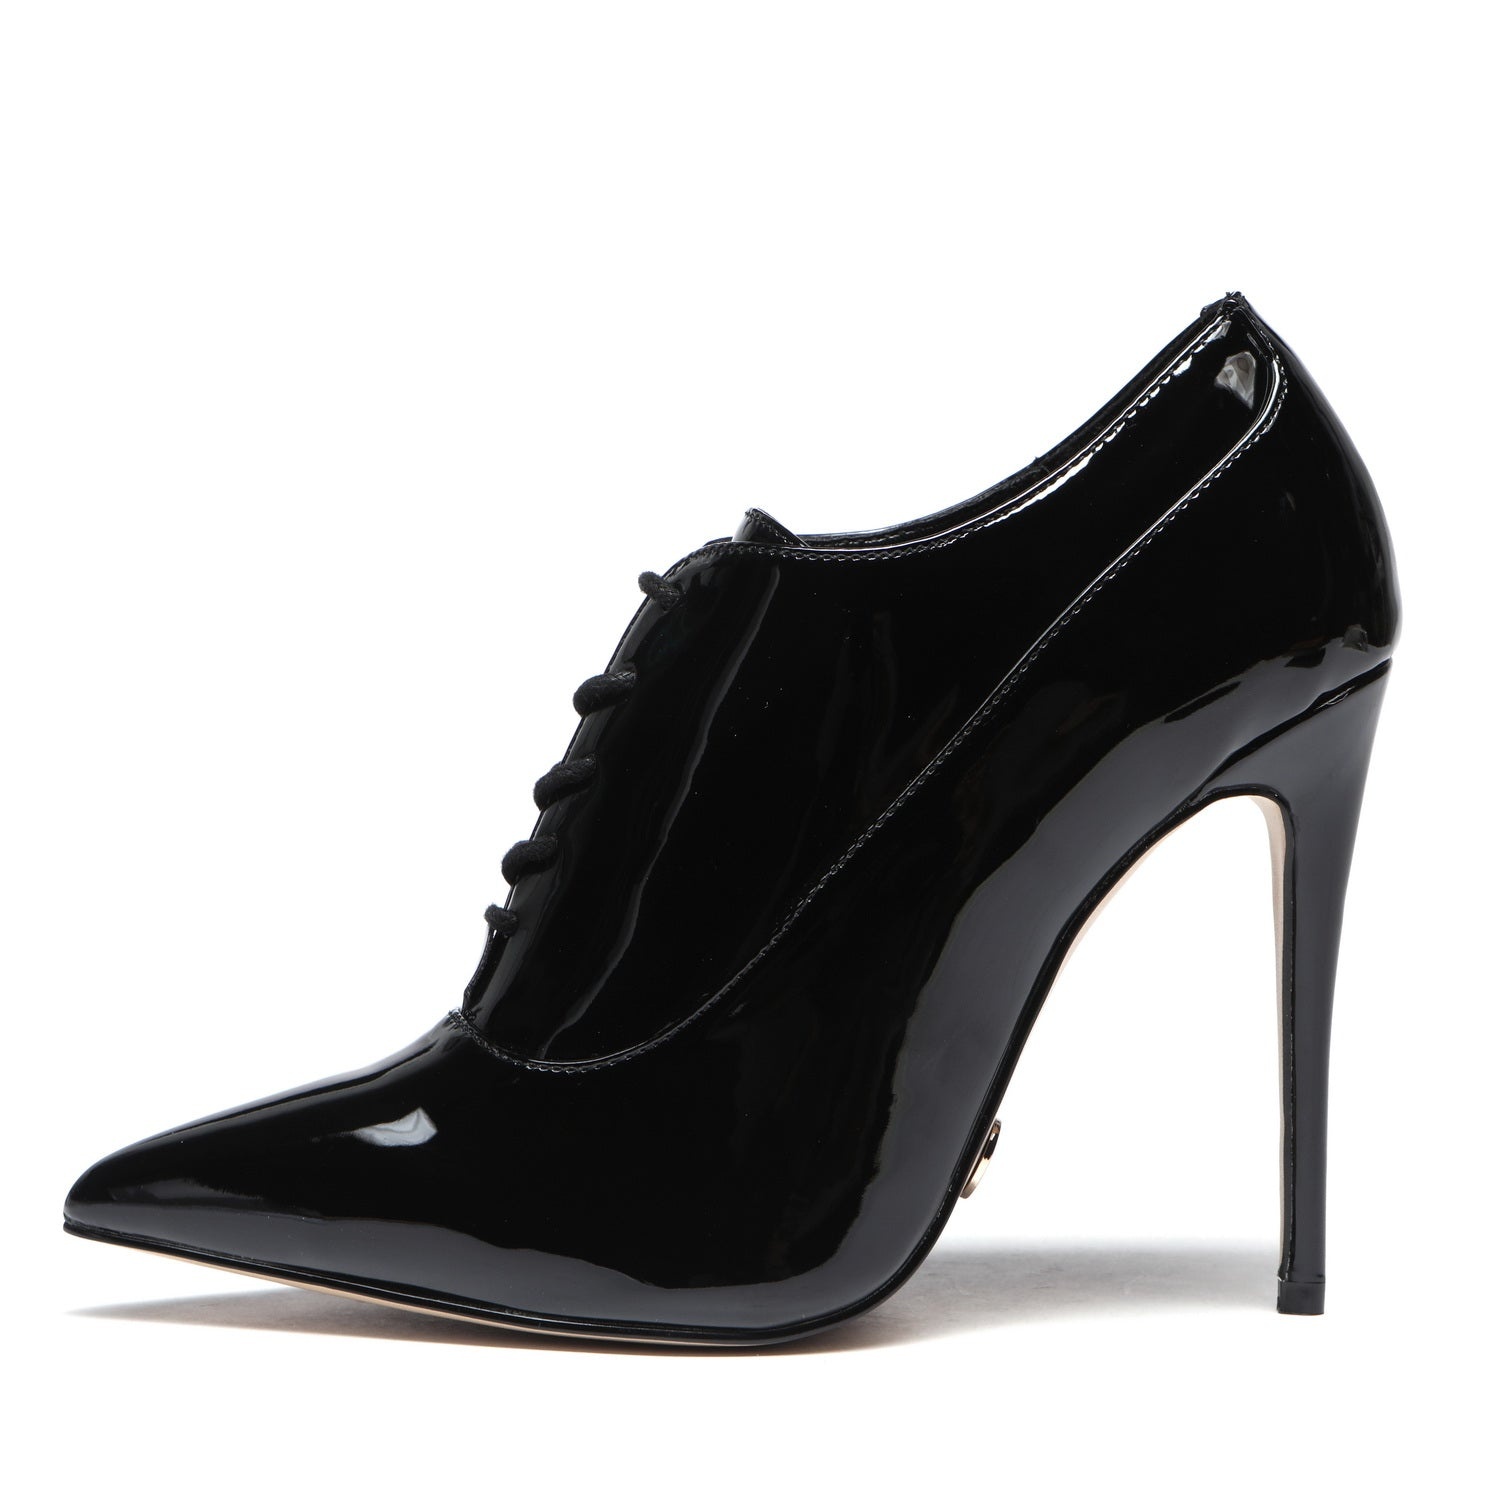 GIARO VICEROY BLACK SHINY - Shoebidoo Shoes | Giaro high heels